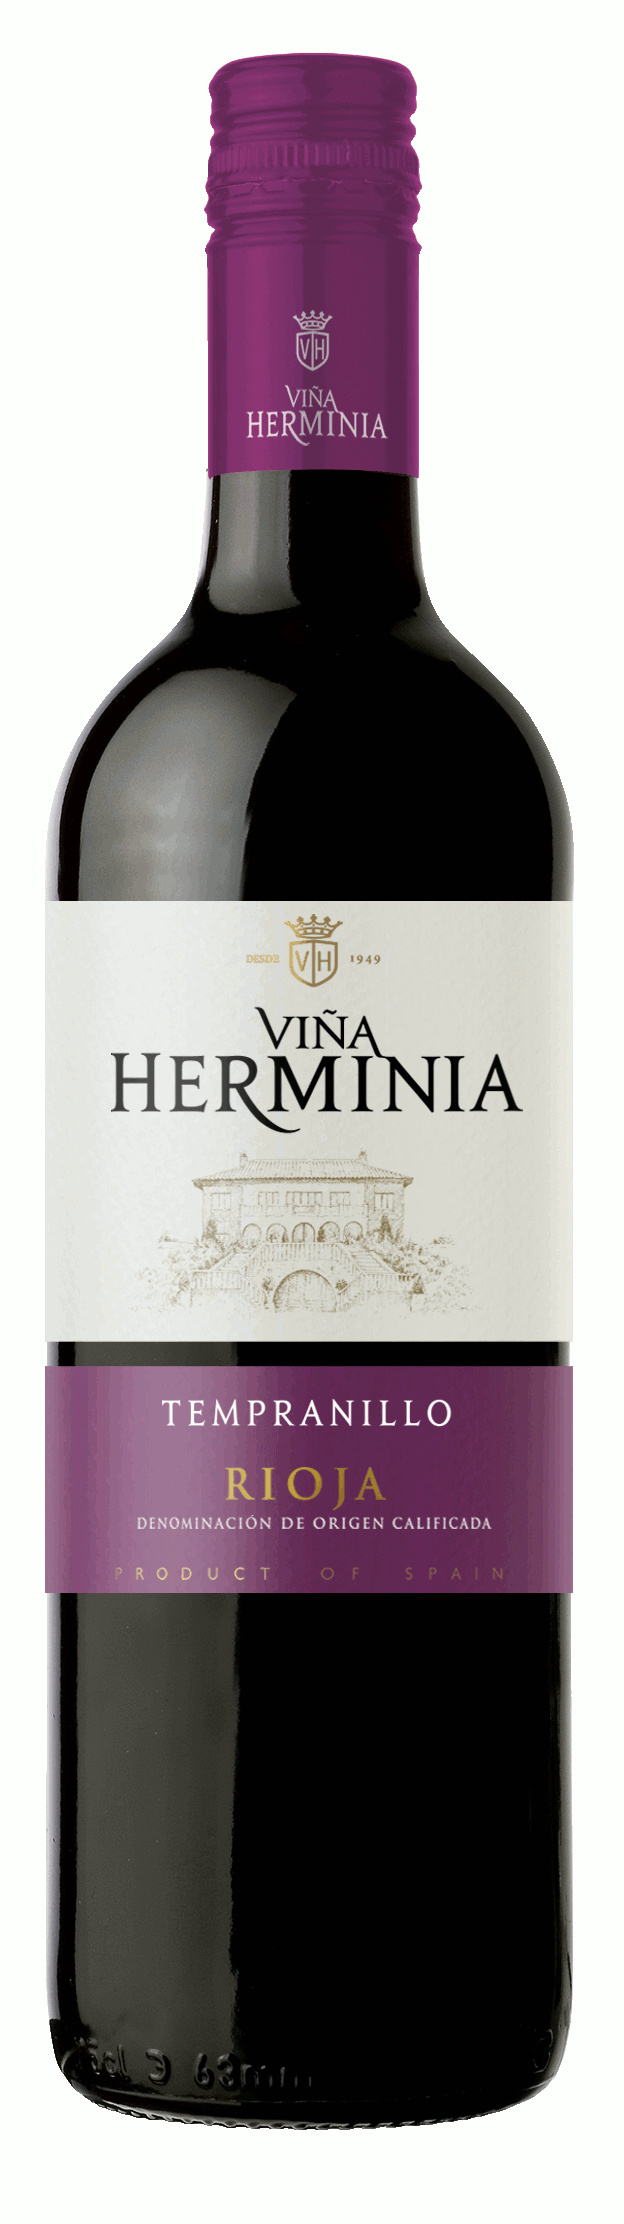 Rioja Vina Herminia Tempranillo tinto